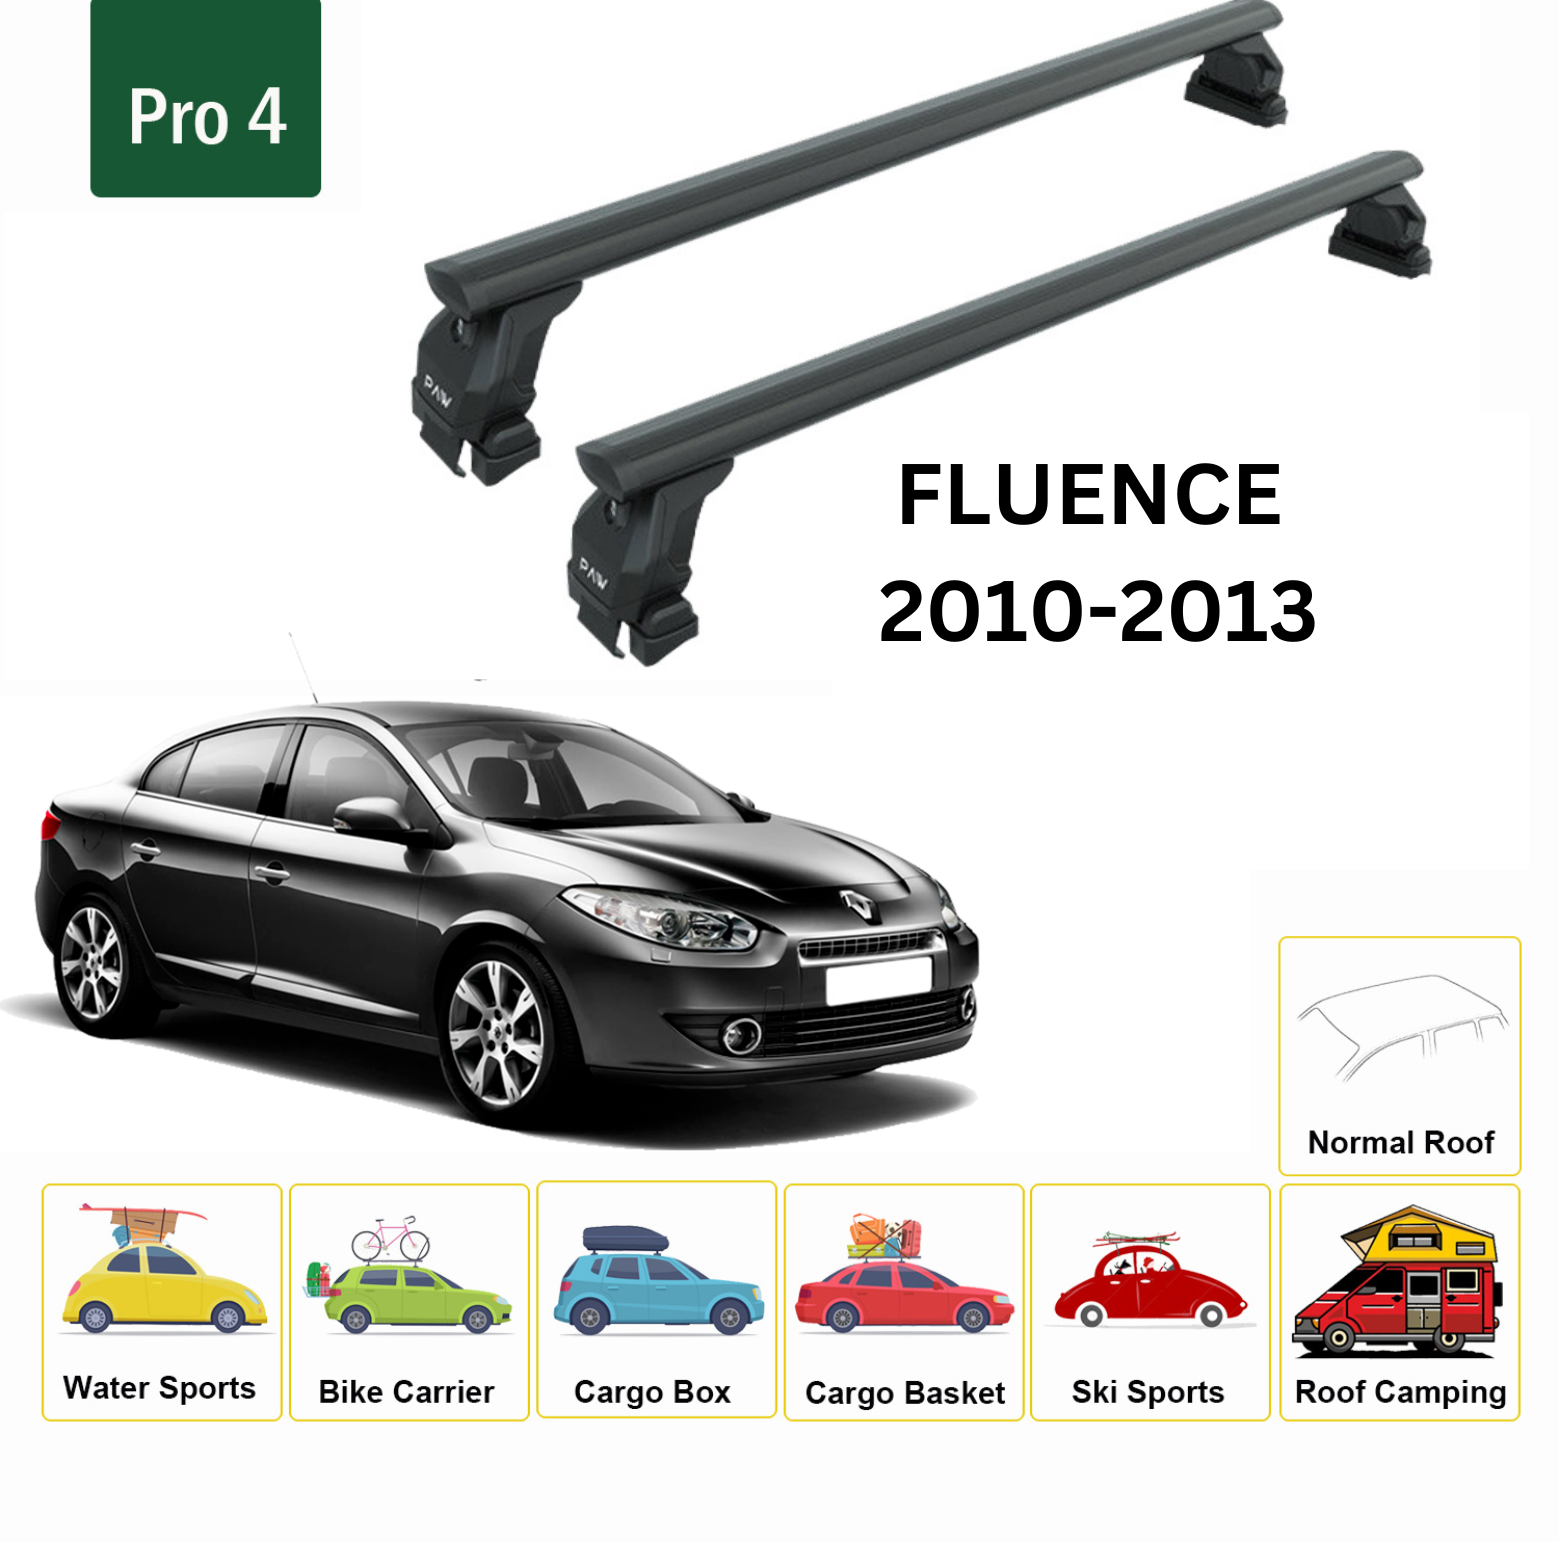 For Renault Fluence 2010-2013 Roof Rack System, Aluminium Cross Bar, Metal Bracket, Normal Roof, Black